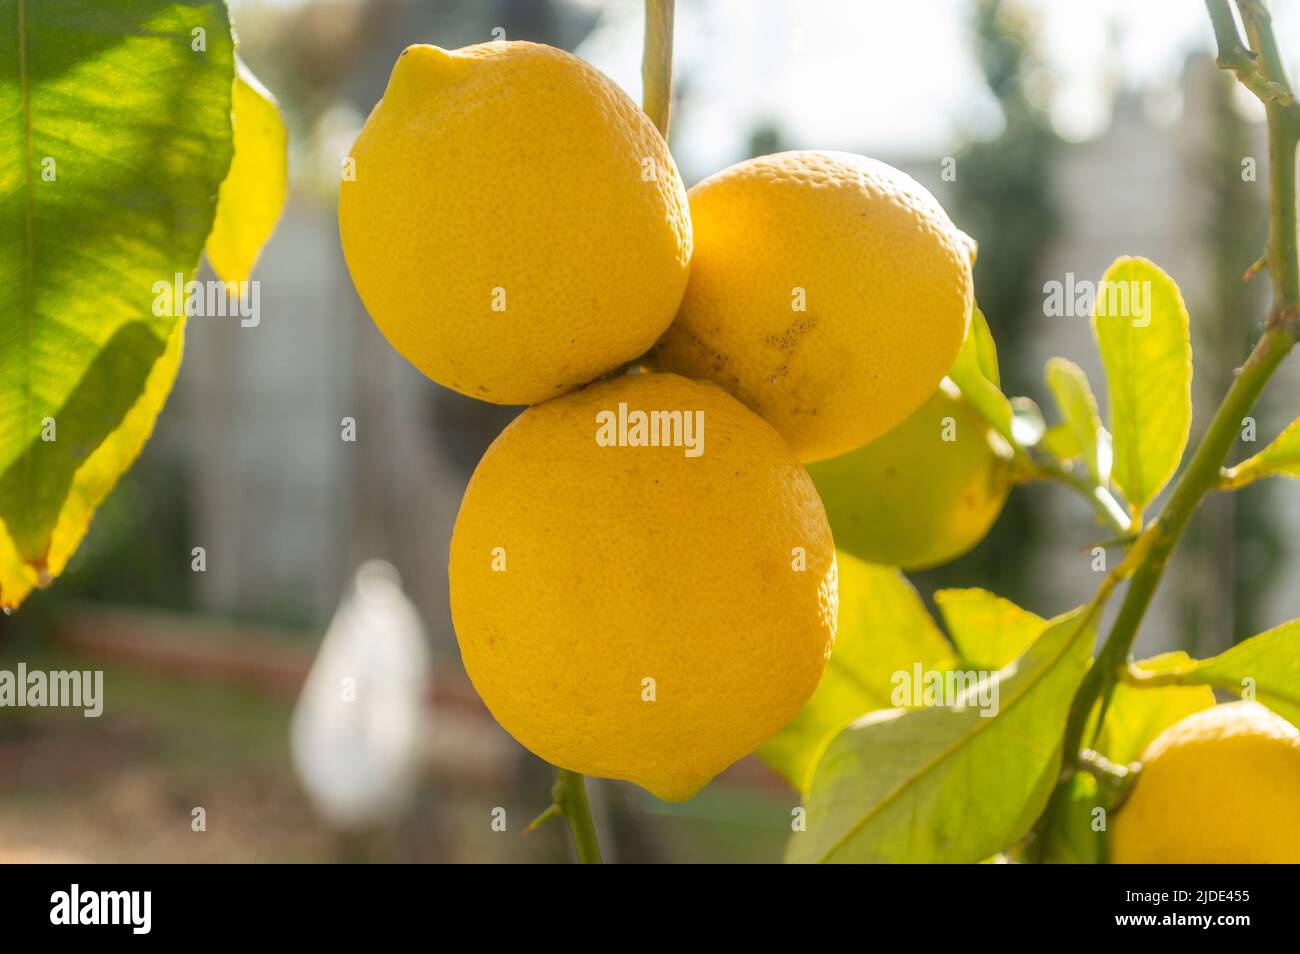 three lemons on the tree Stock Photo